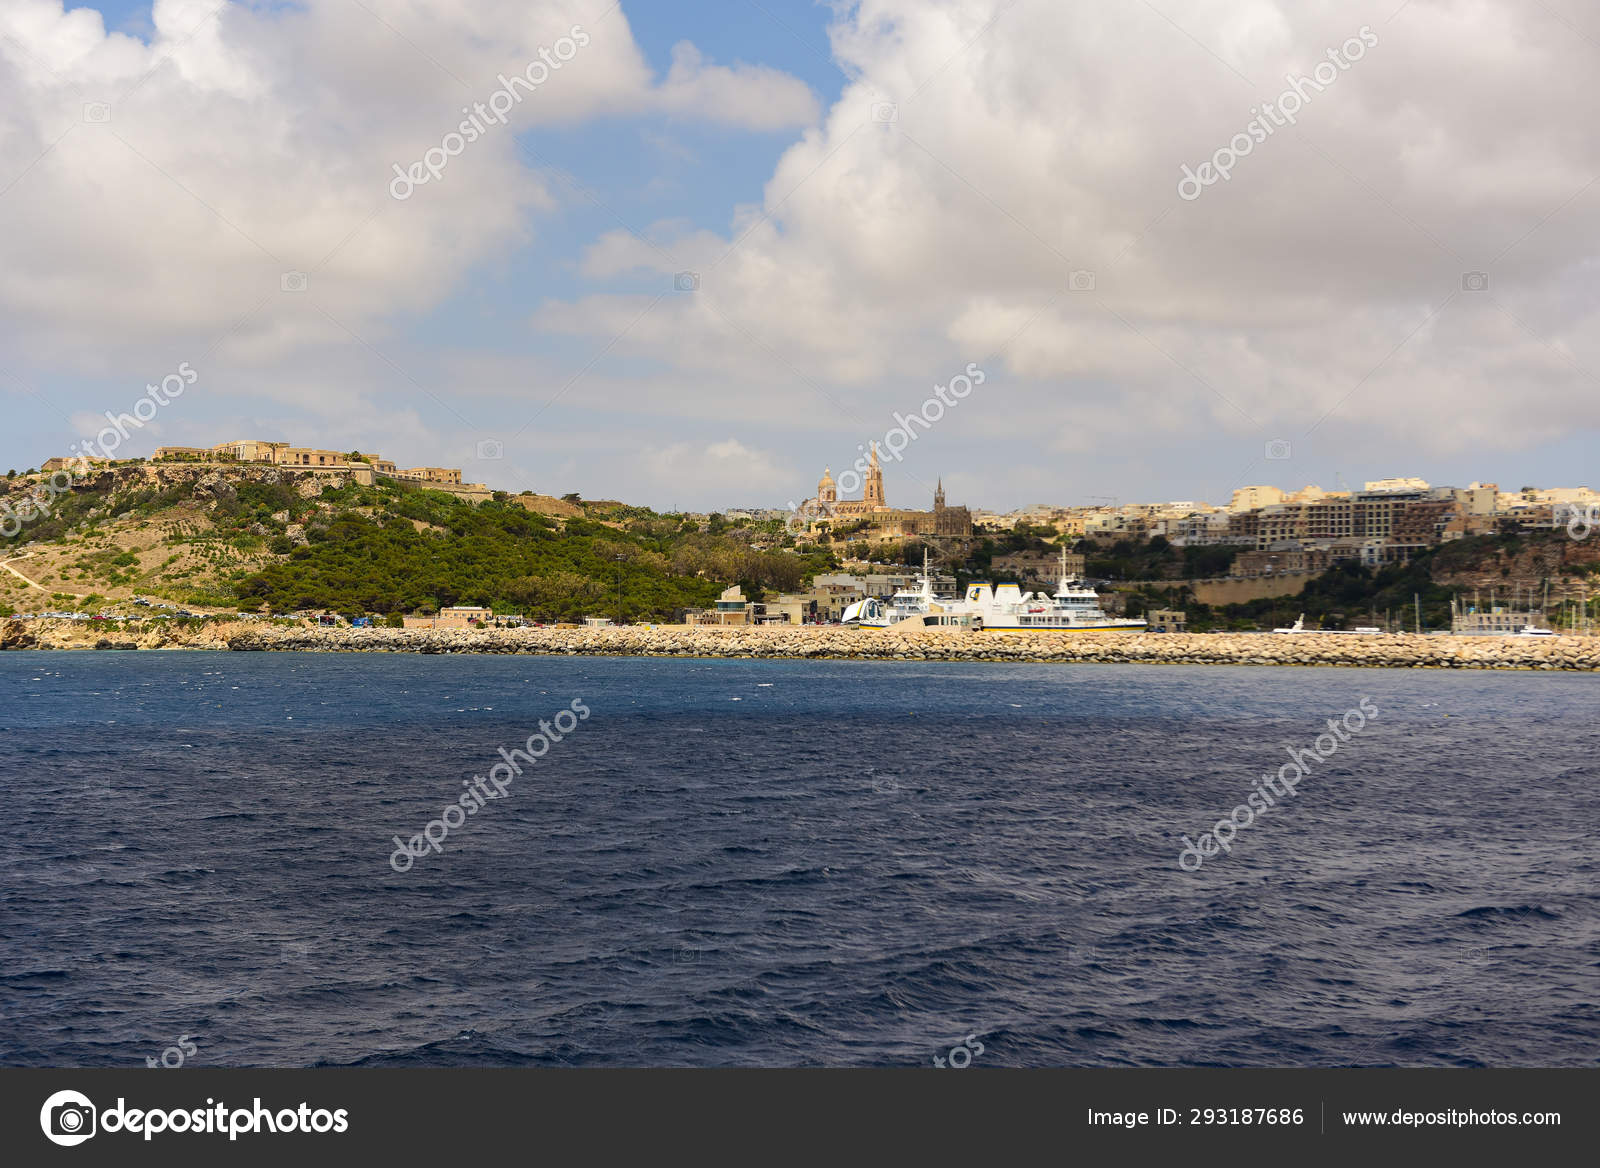 Mgarr Gozo Malta 2019 View Harbaour Mgarr Ferryboat Coming Malta Stock Photo C Martinscphoto 293187686